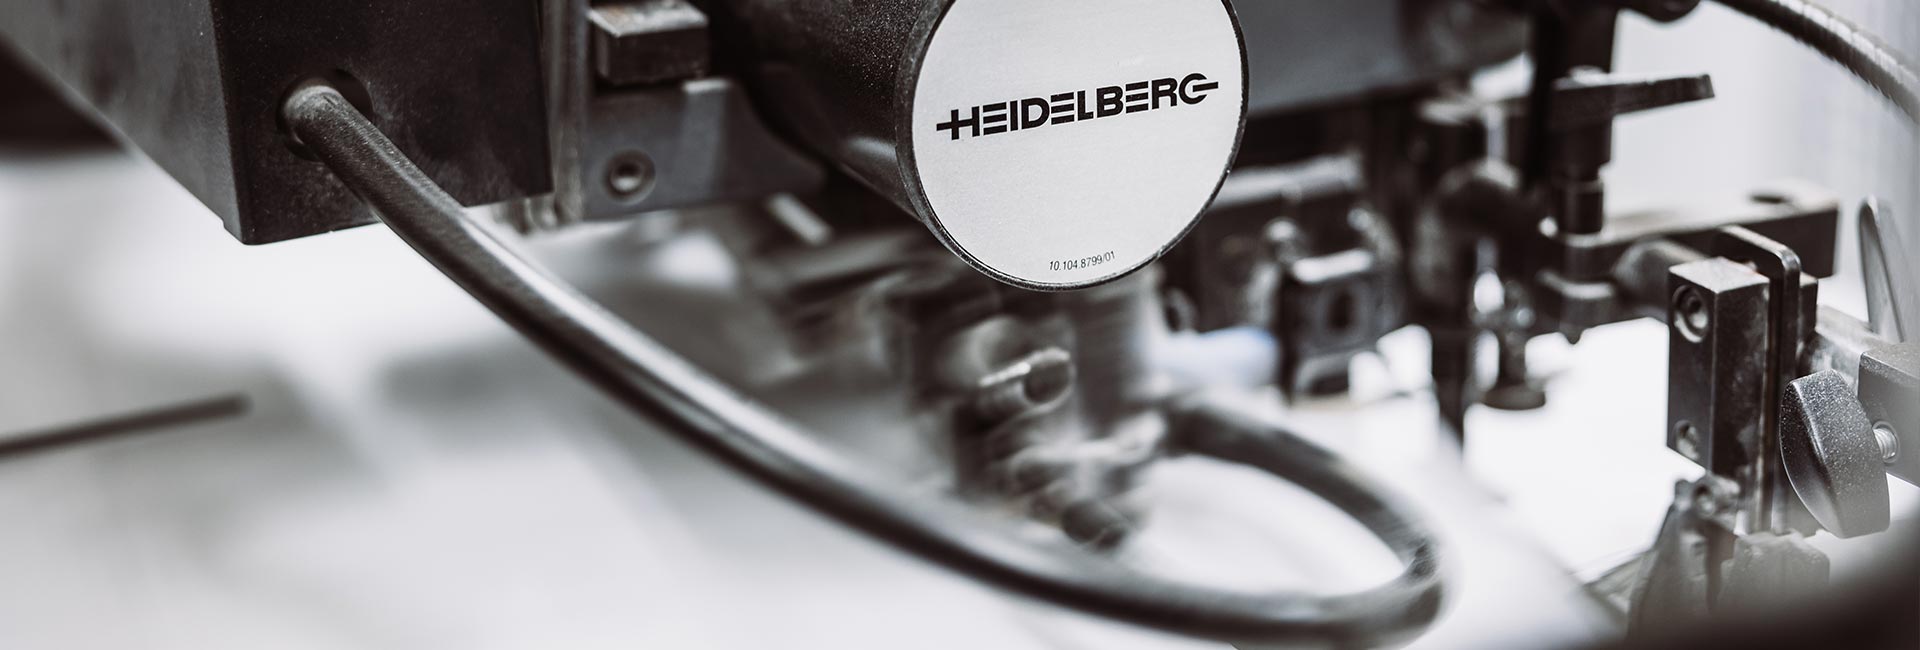 Heidelberger Speedmaster Anleger